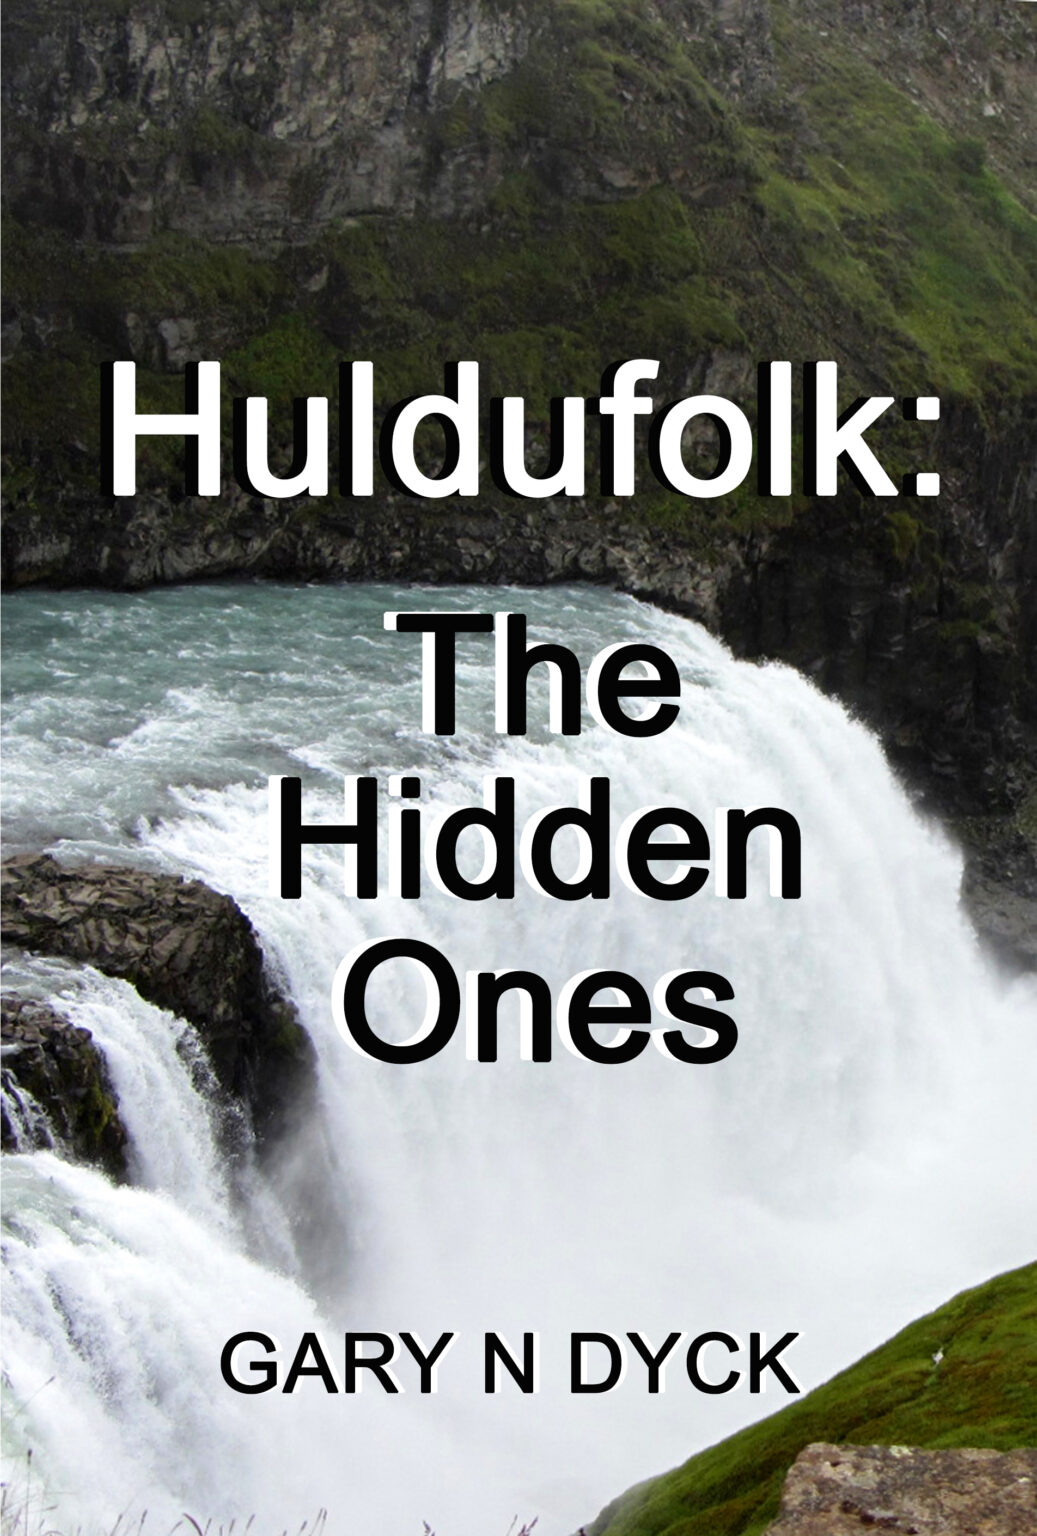 Huldufolk: The Hidden Ones by author Gary N Dyck